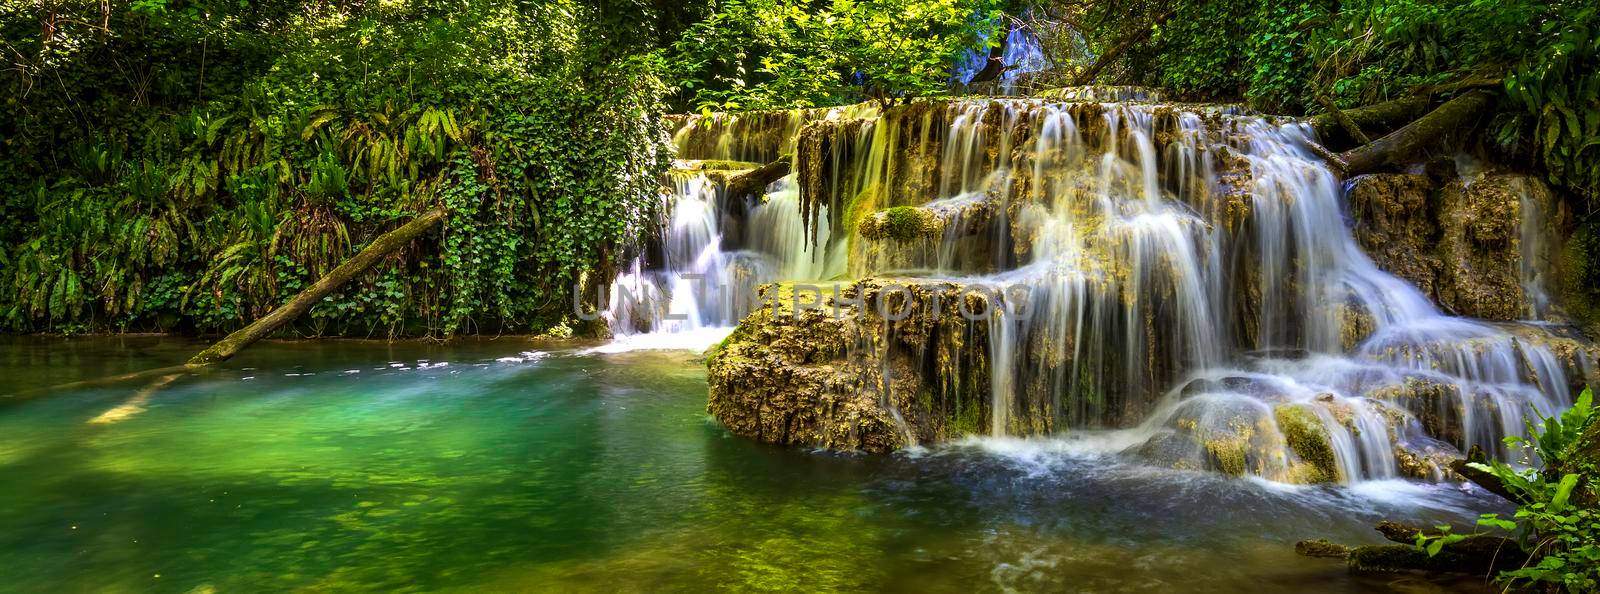 Cascade waterfalls paniramic view. Krushuna falls in Bulgaria near the village of Krushuna, Letnitsa. by EdVal